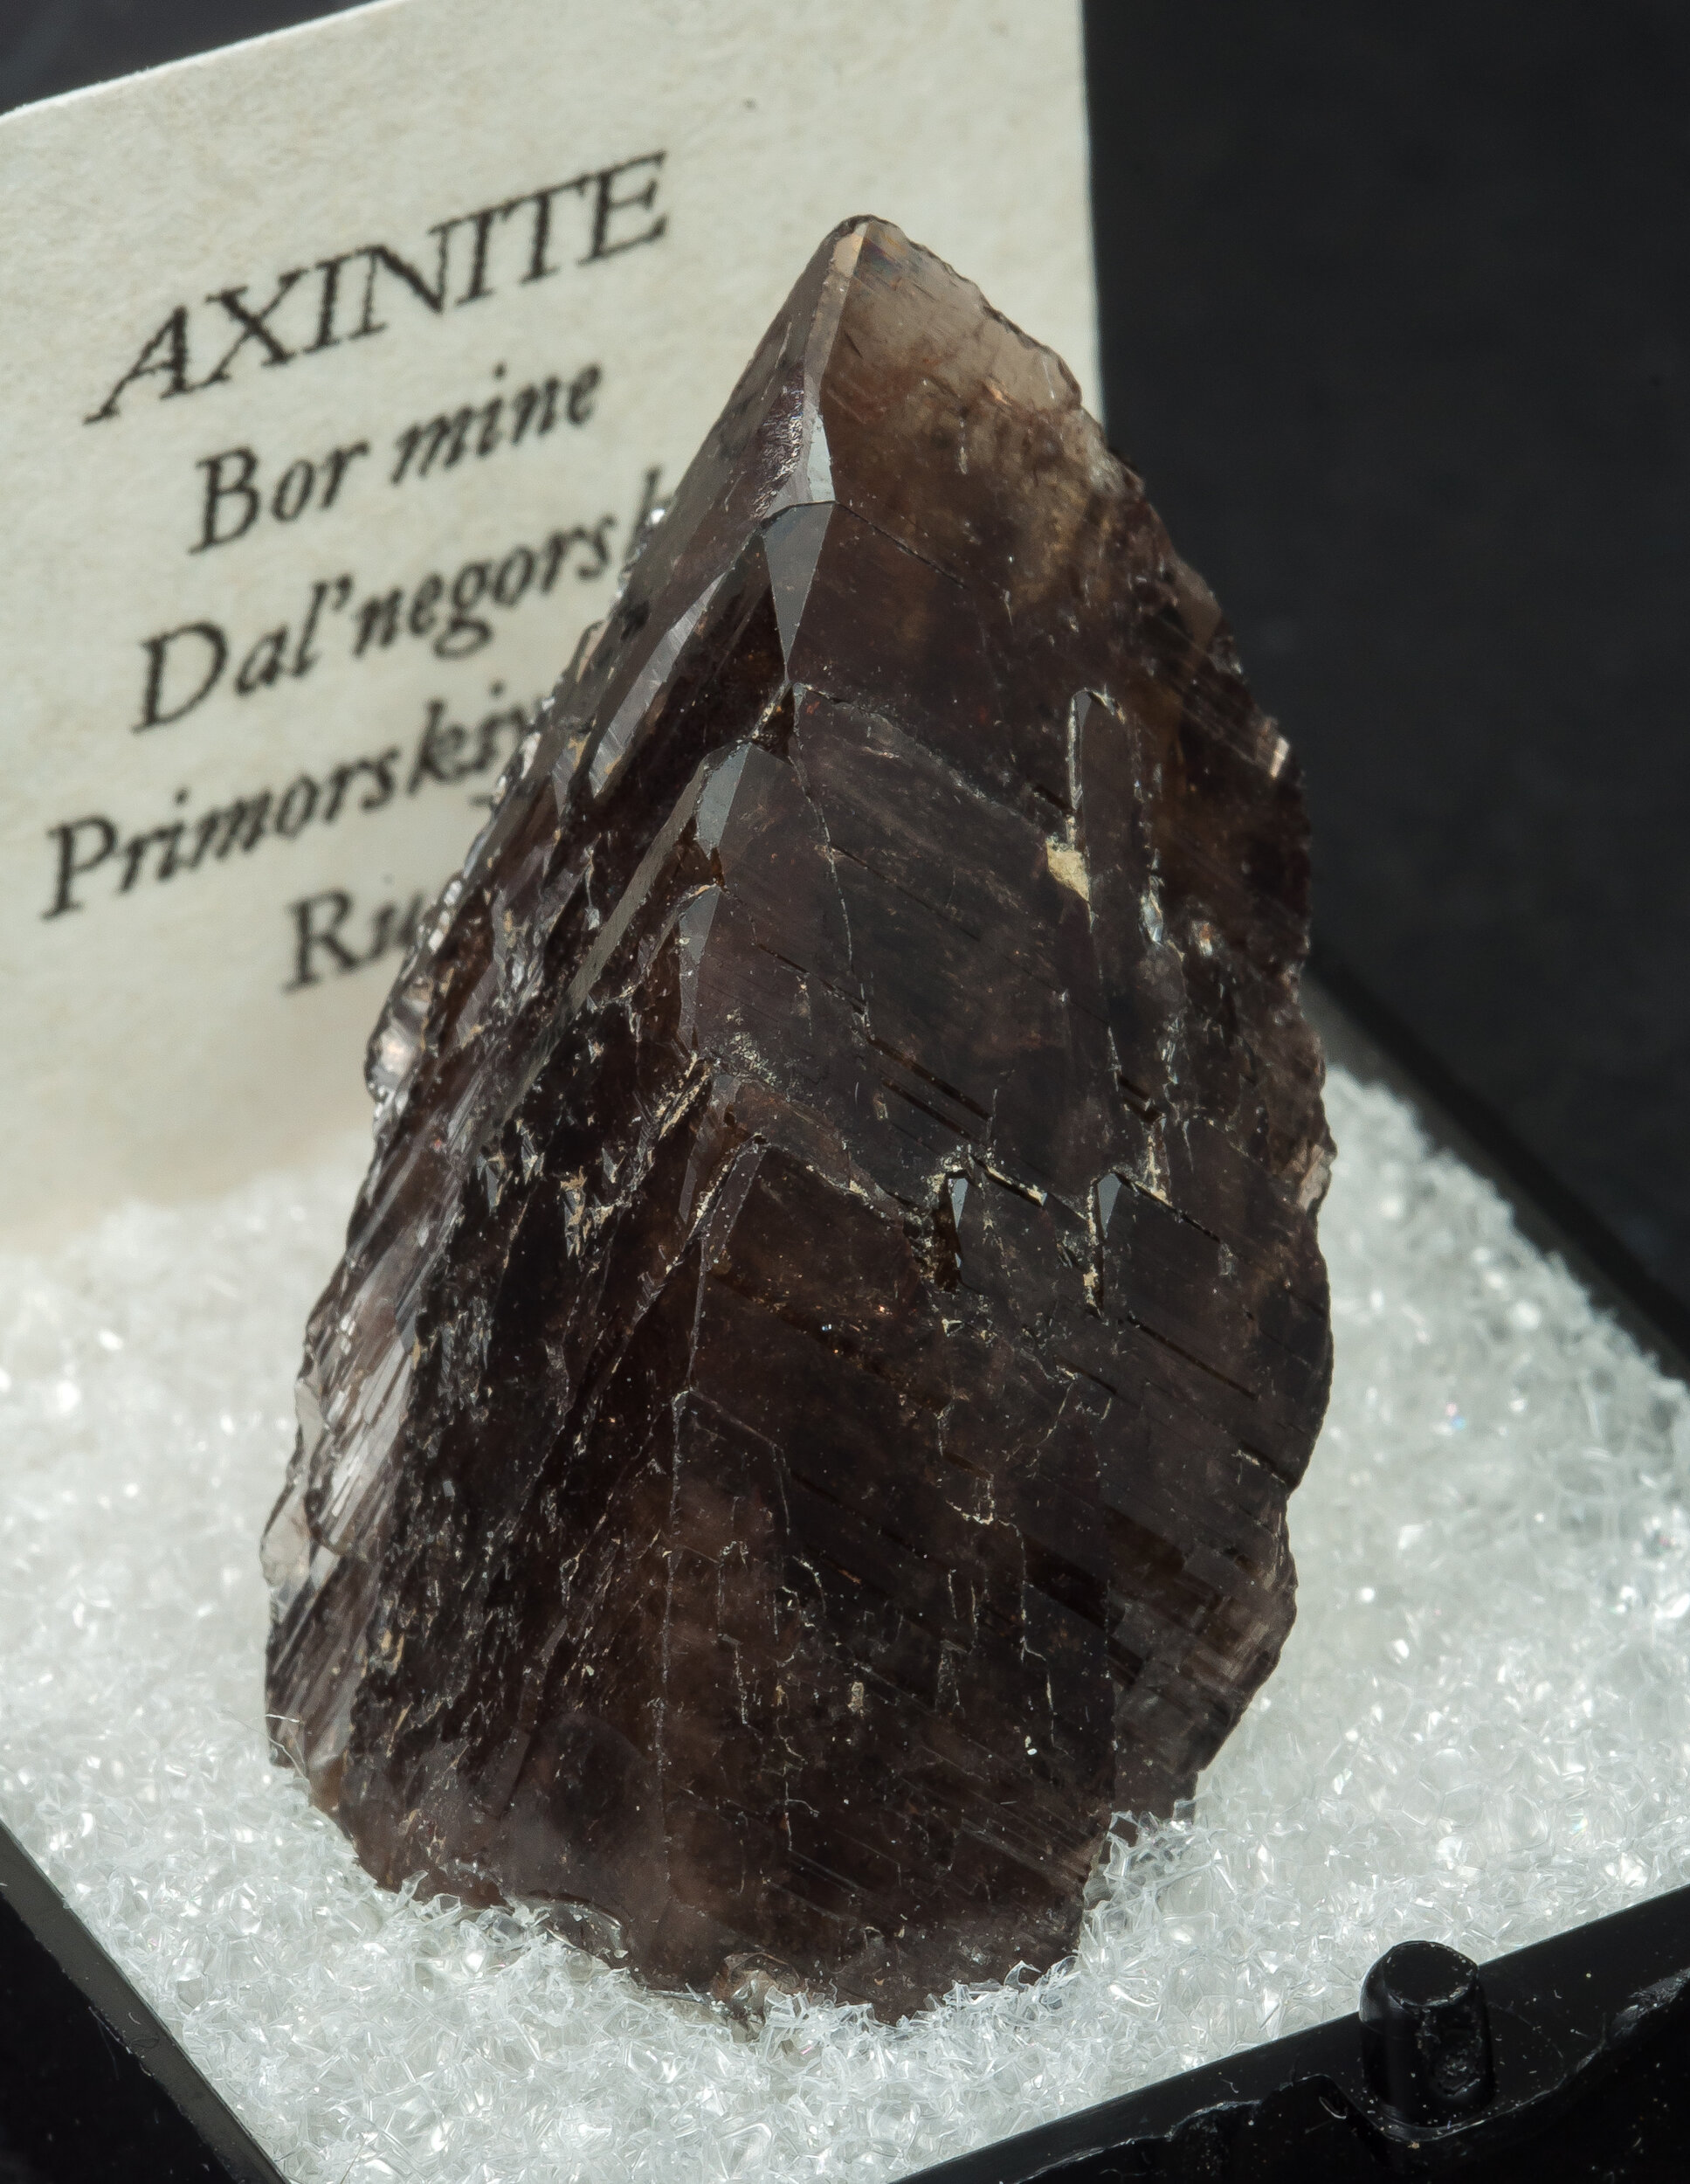 specimens/s_imagesAO0/Axinite-TBR56AO0s.jpg